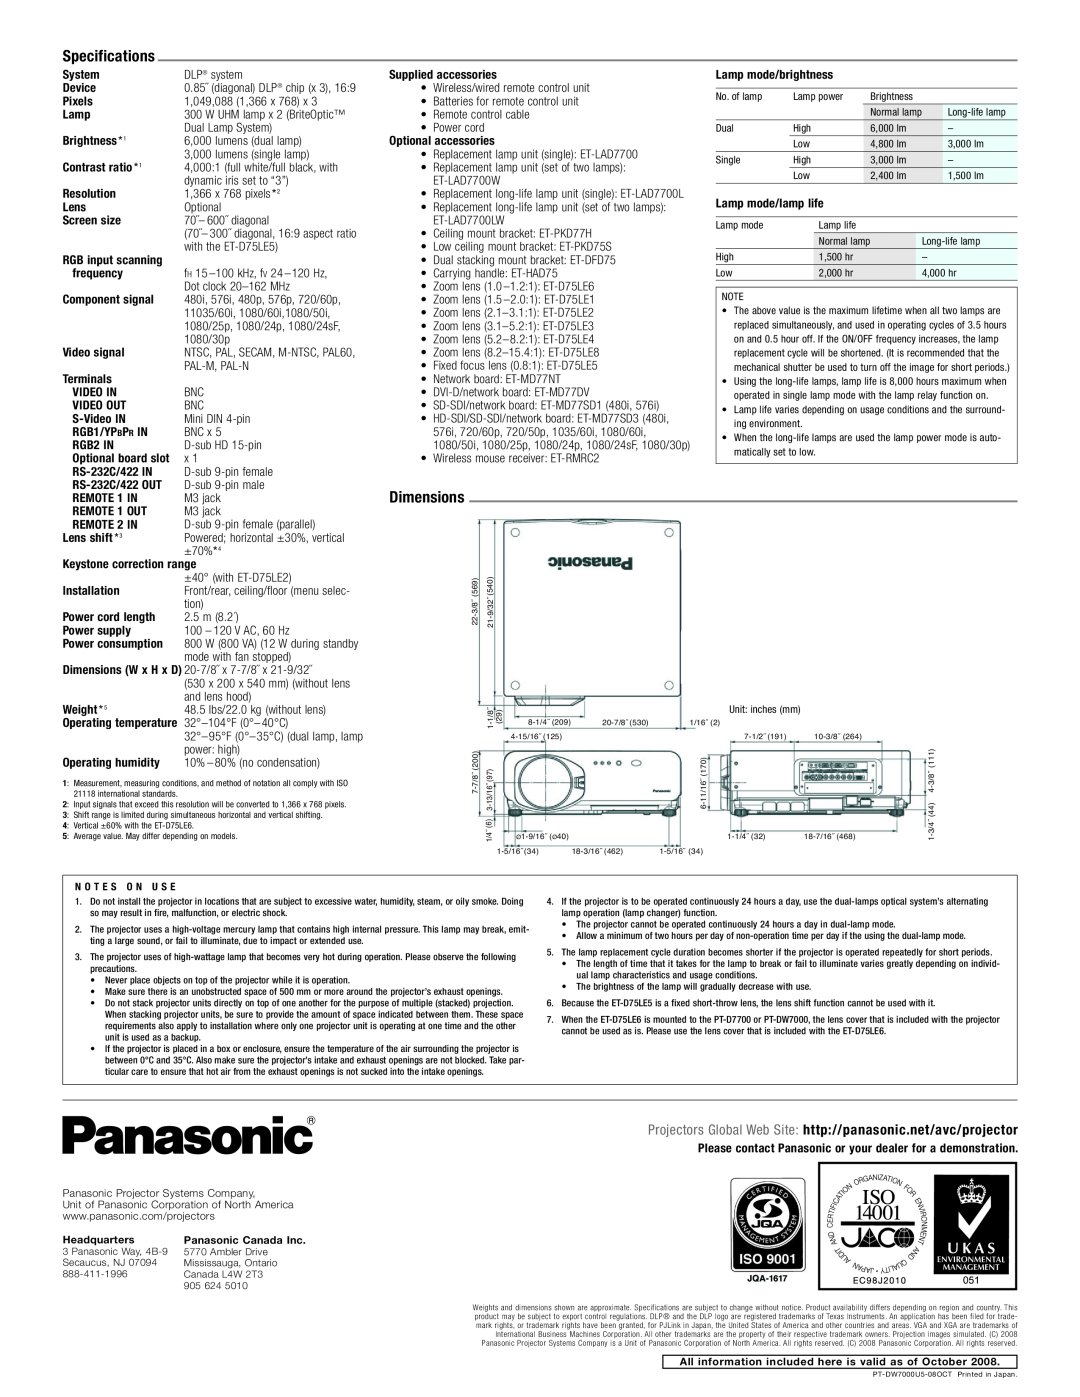 Panasonic PT-DW7000U-K manual Specifications, Dimensions, Projectors Global Web Site http//panasonic.net/avc/projector 